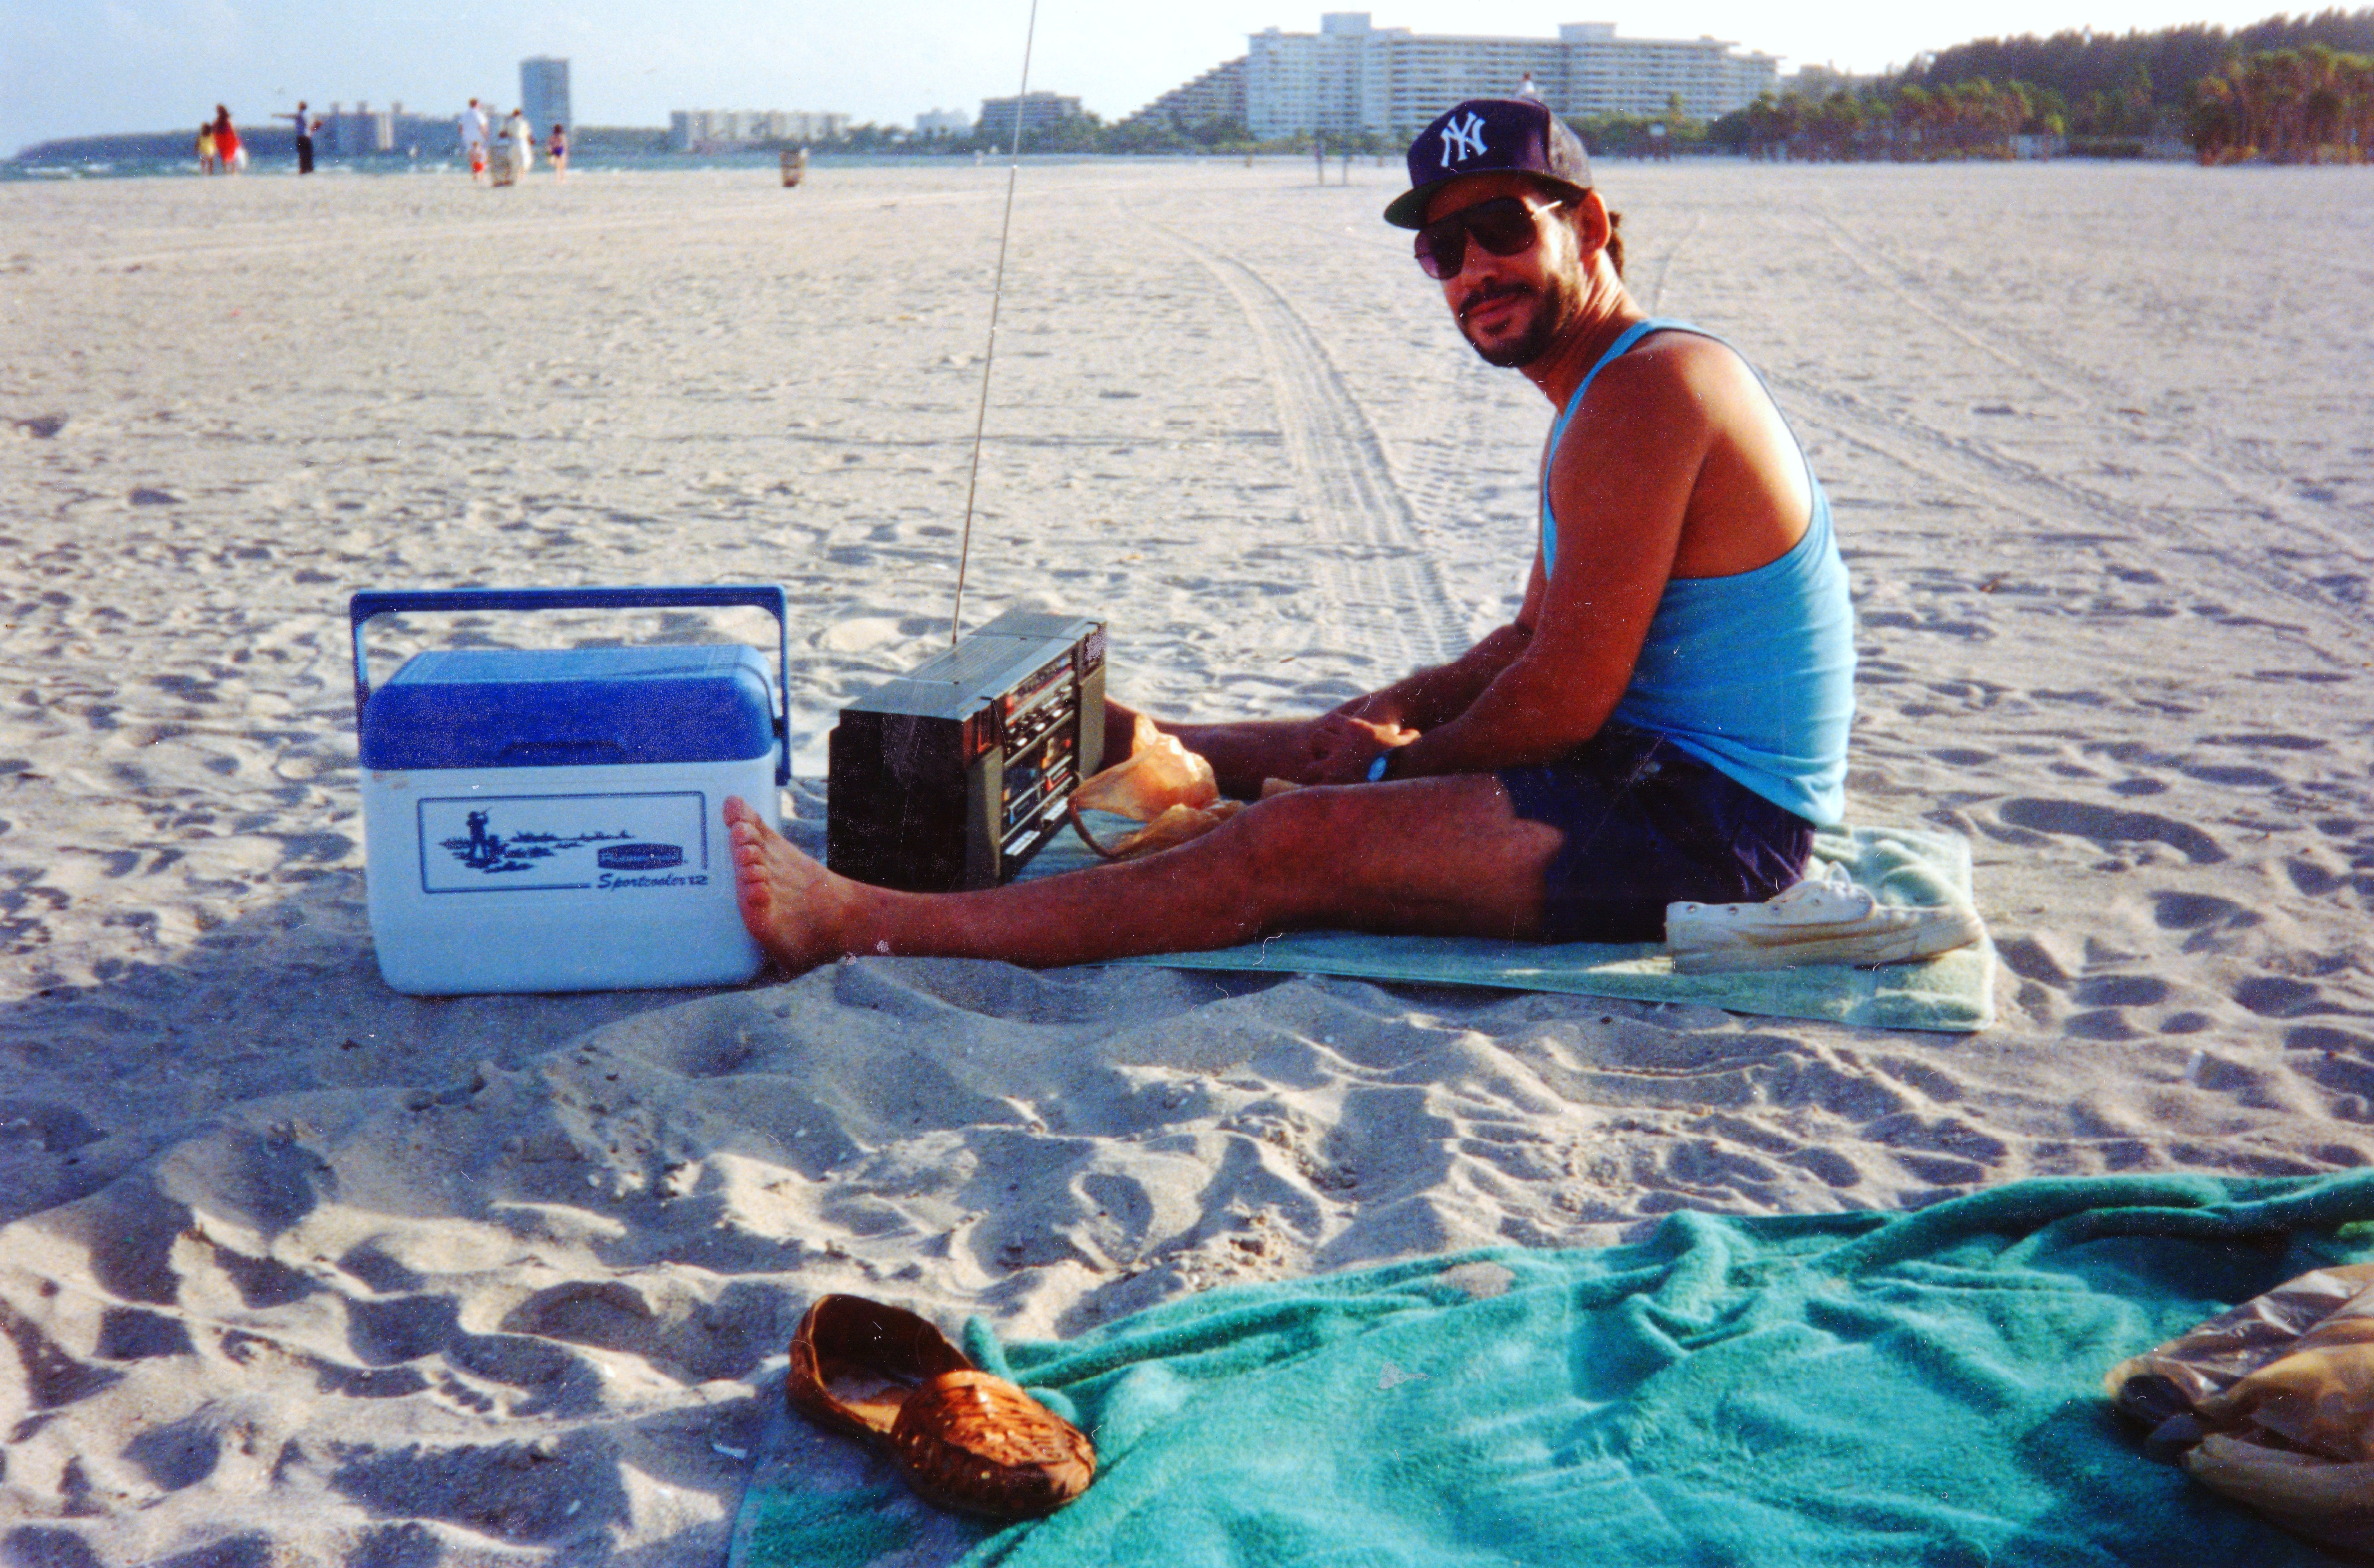 Robert Picos at the beach